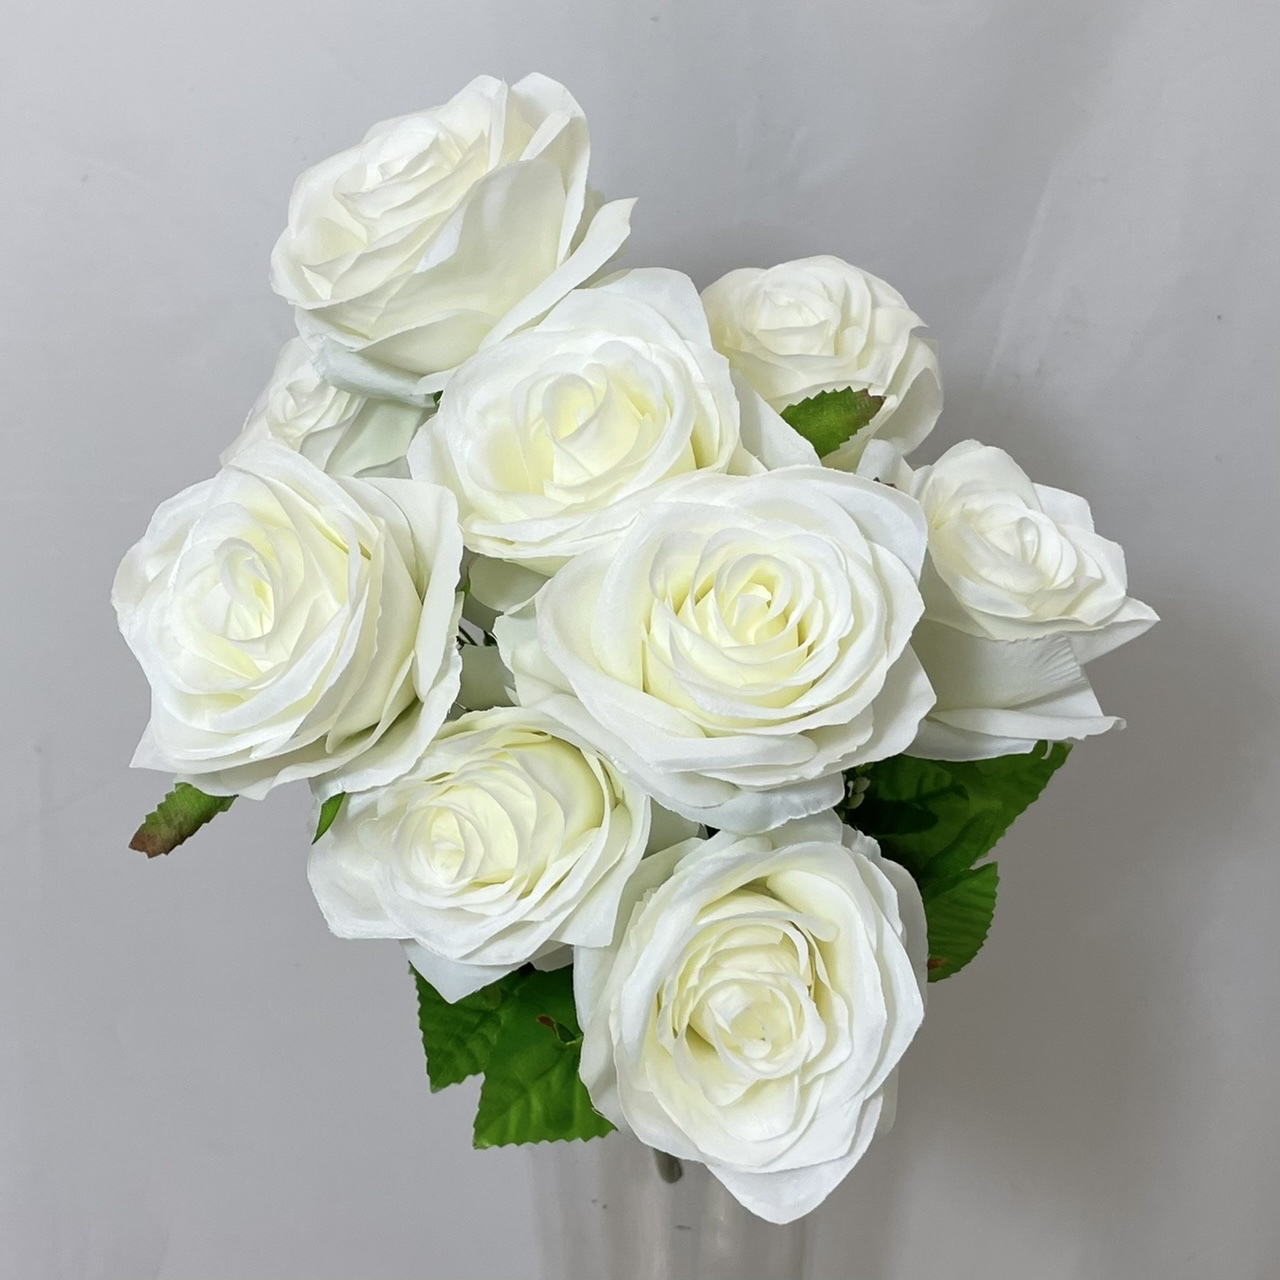 Open Rose BUSH White/Pale Ivory - Village Green